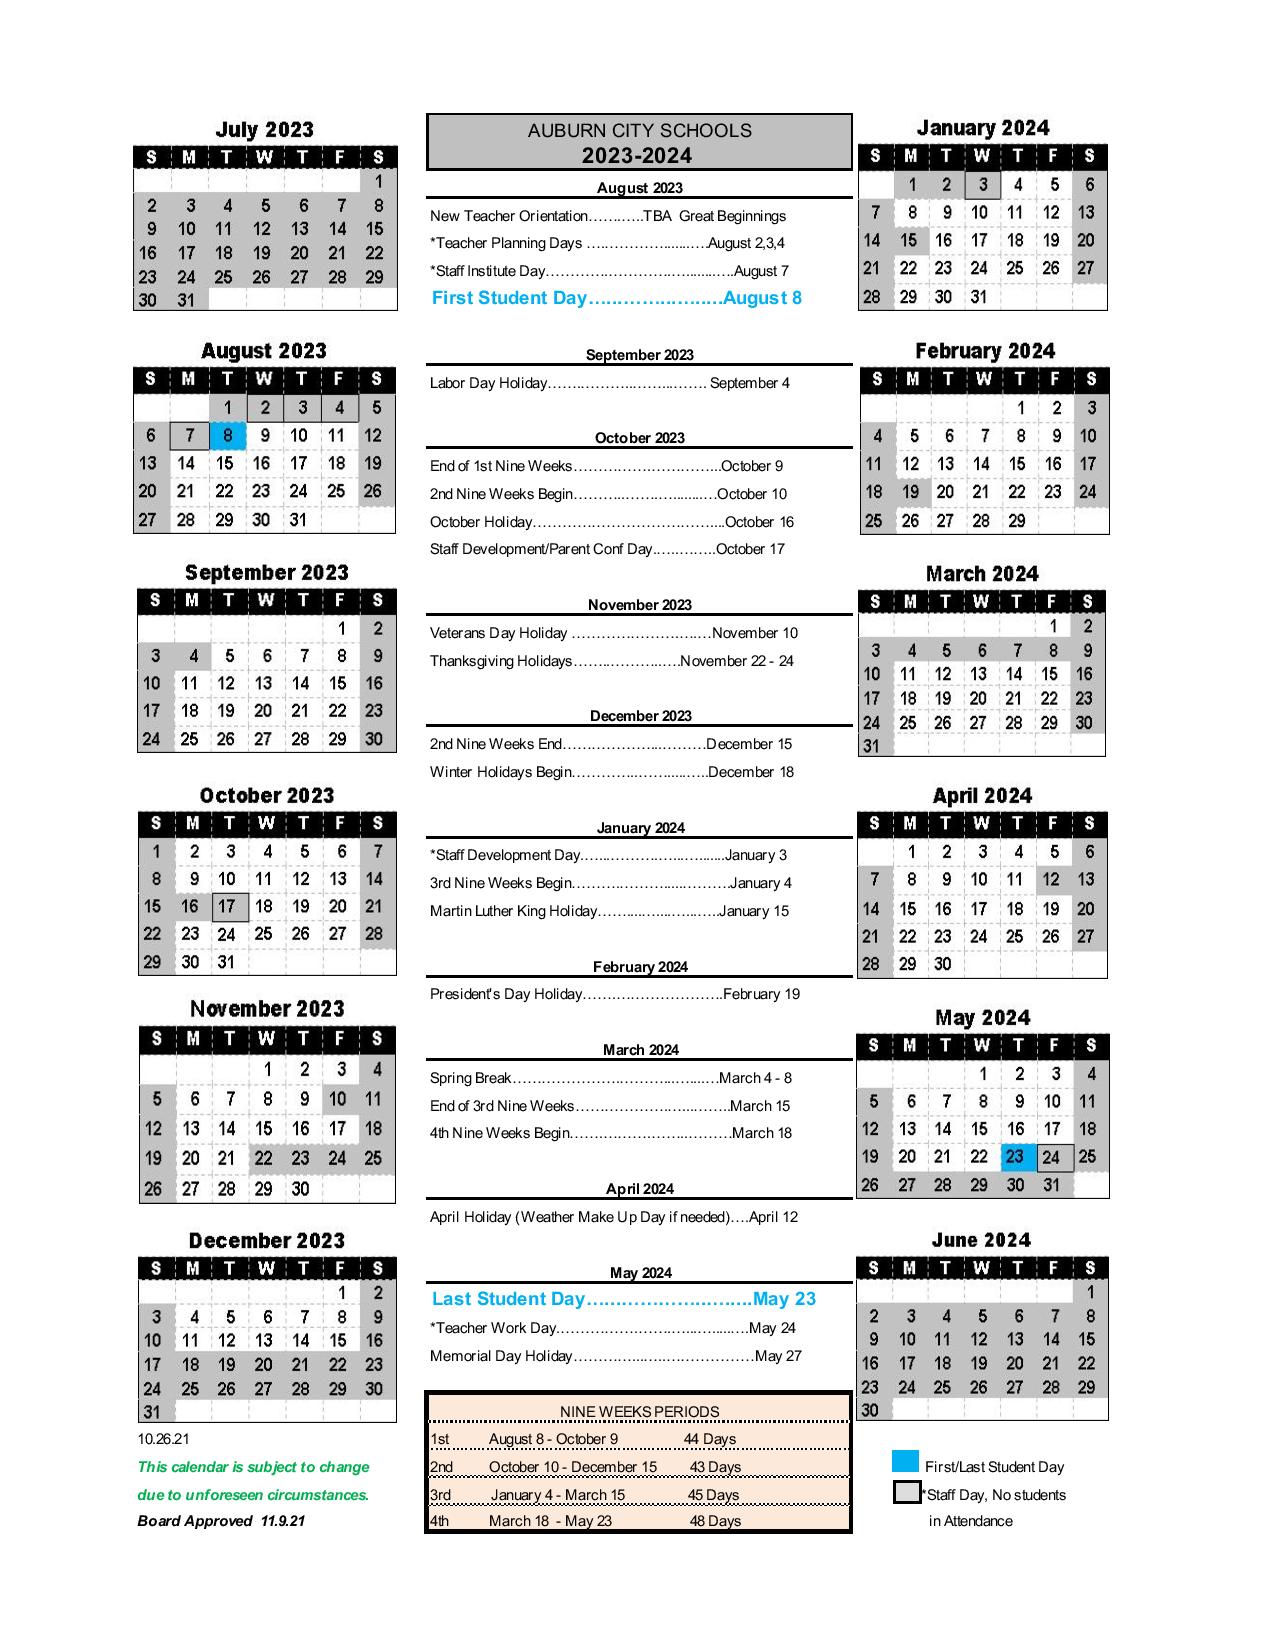 auburn-city-schools-calendar-2023-2024-in-pdf